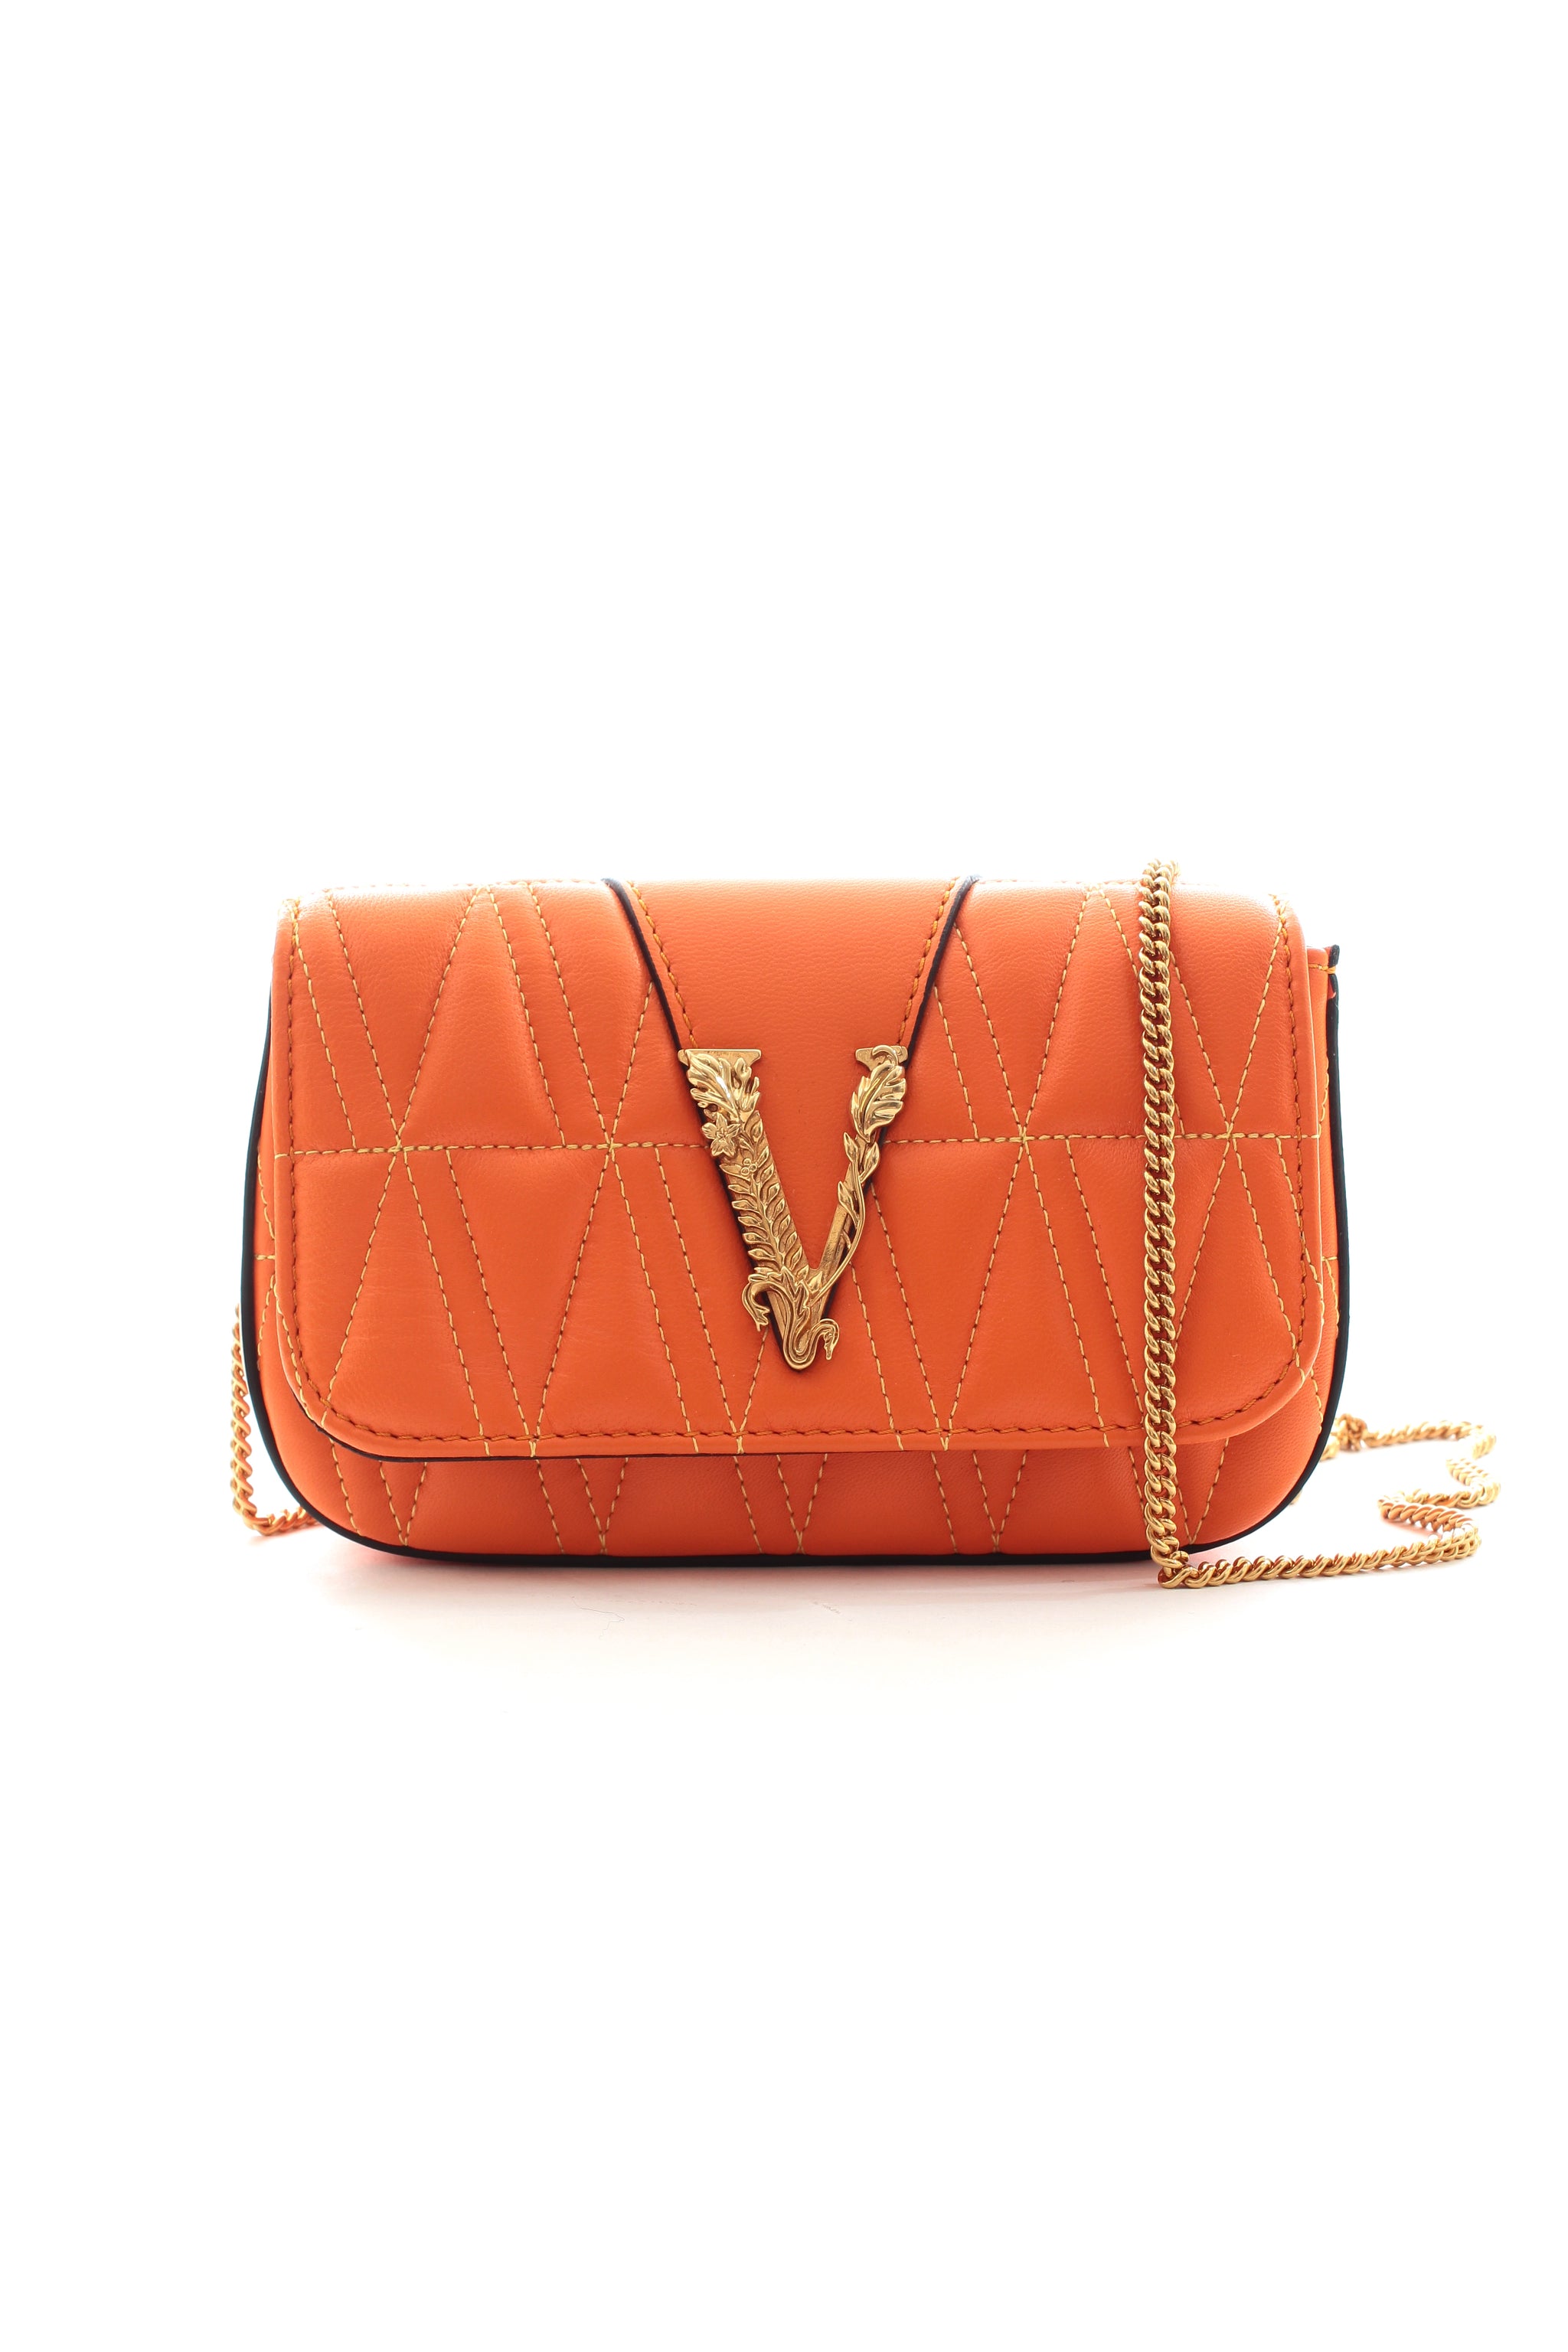 Versace Women's Virtus Quilted Leather Shoulder Bag